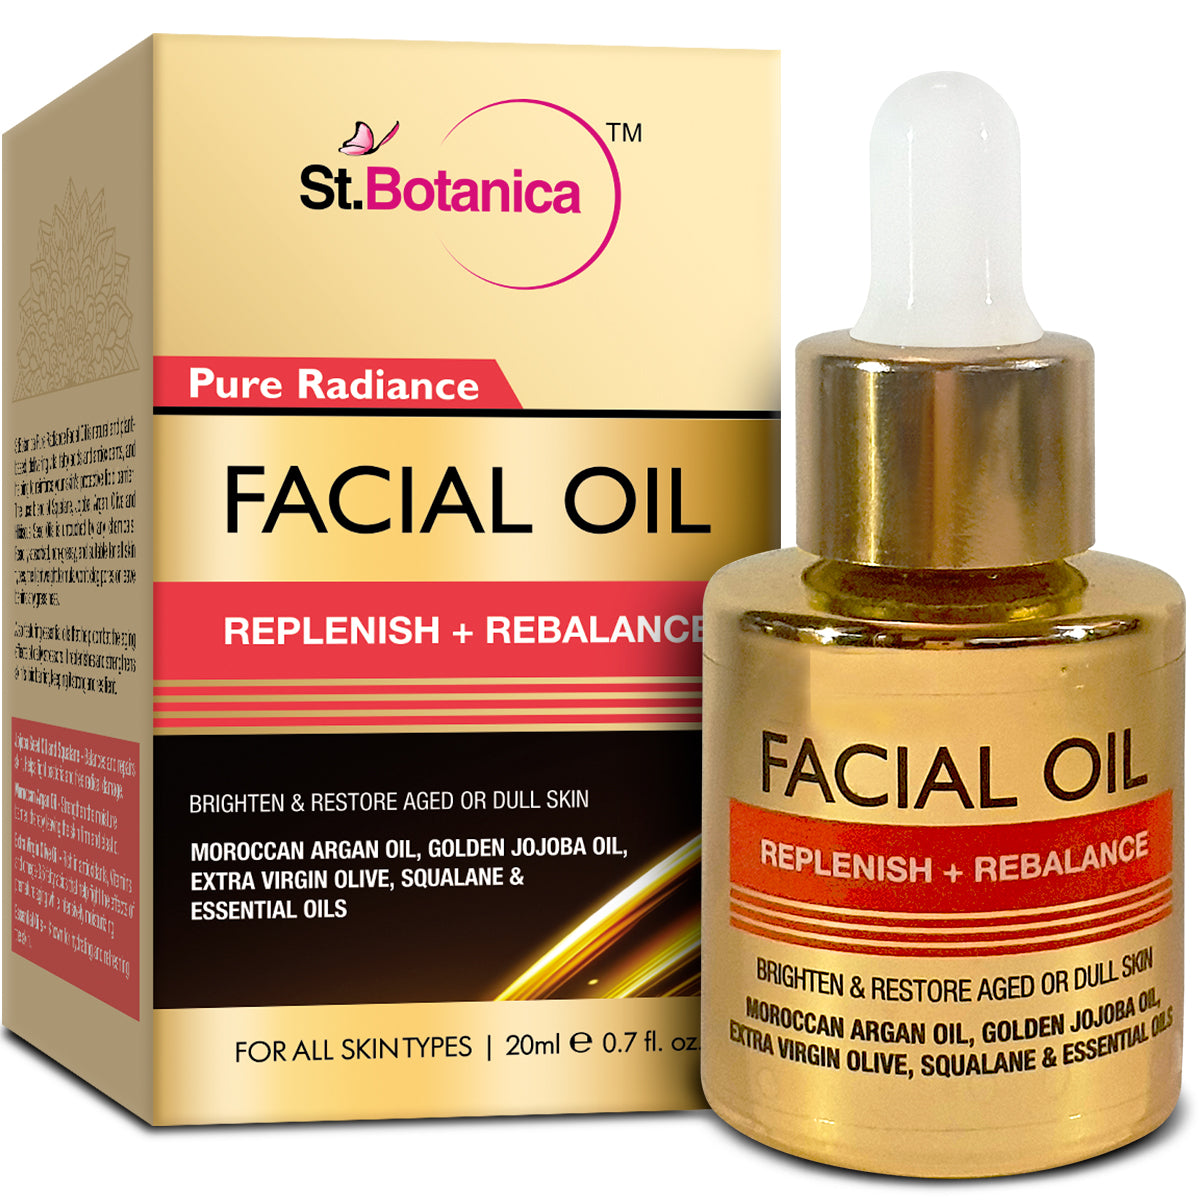 St.Botanica Pure Radiance Facial Oil Replenish + Rebalance - Brighten & Restore Aged or Dull Skin, 20 ml (STBOT574)